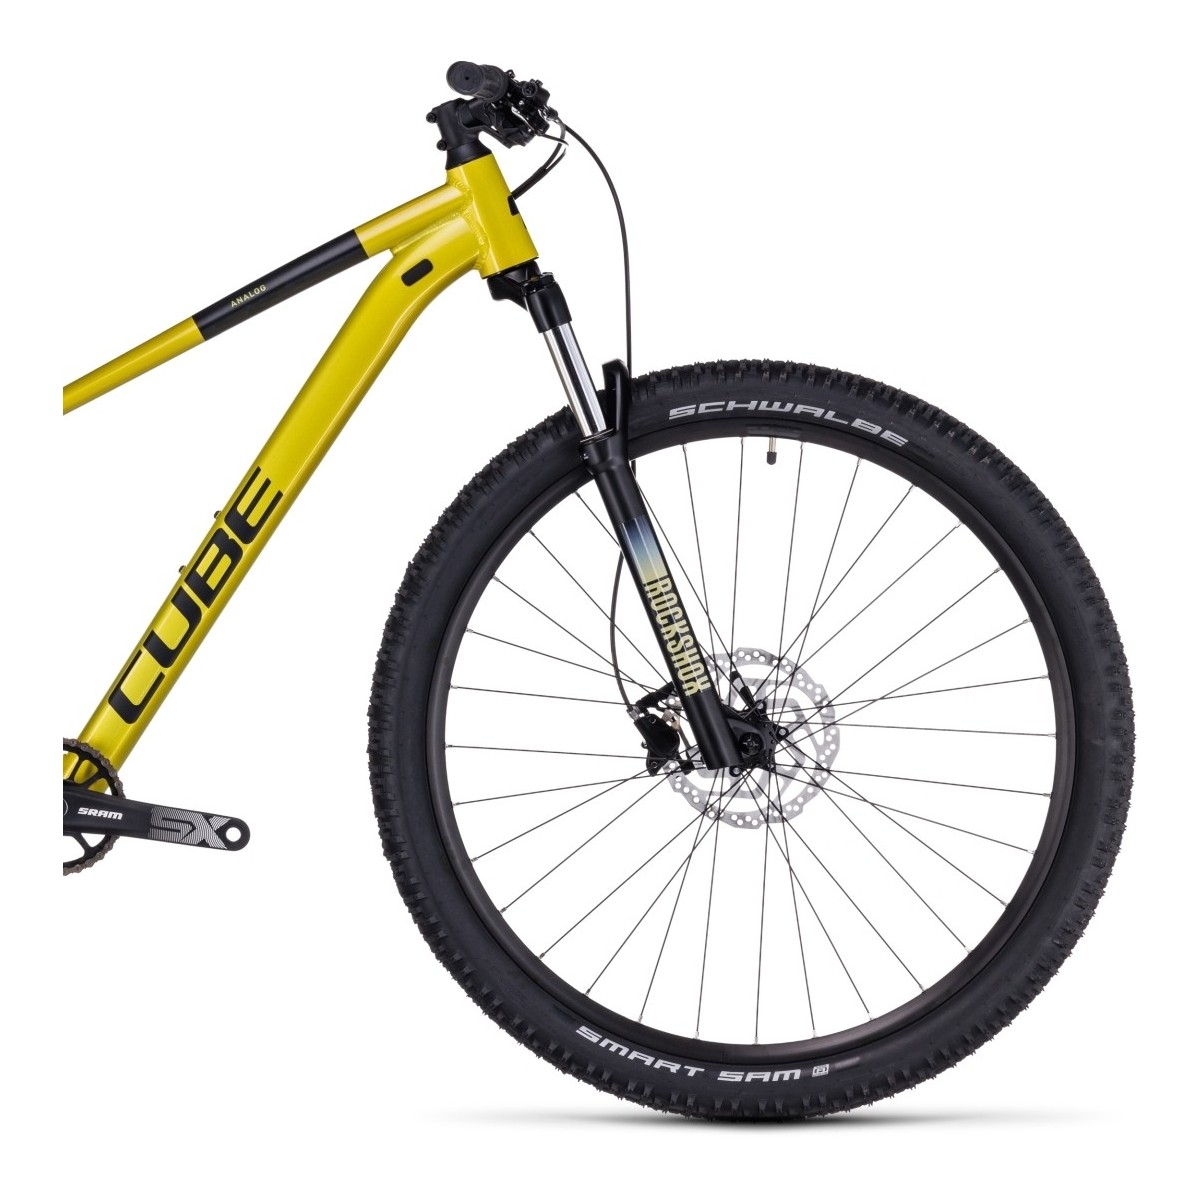 CUBE ANALOG 29 kalnu velosipēds - flashlime/black - 2023